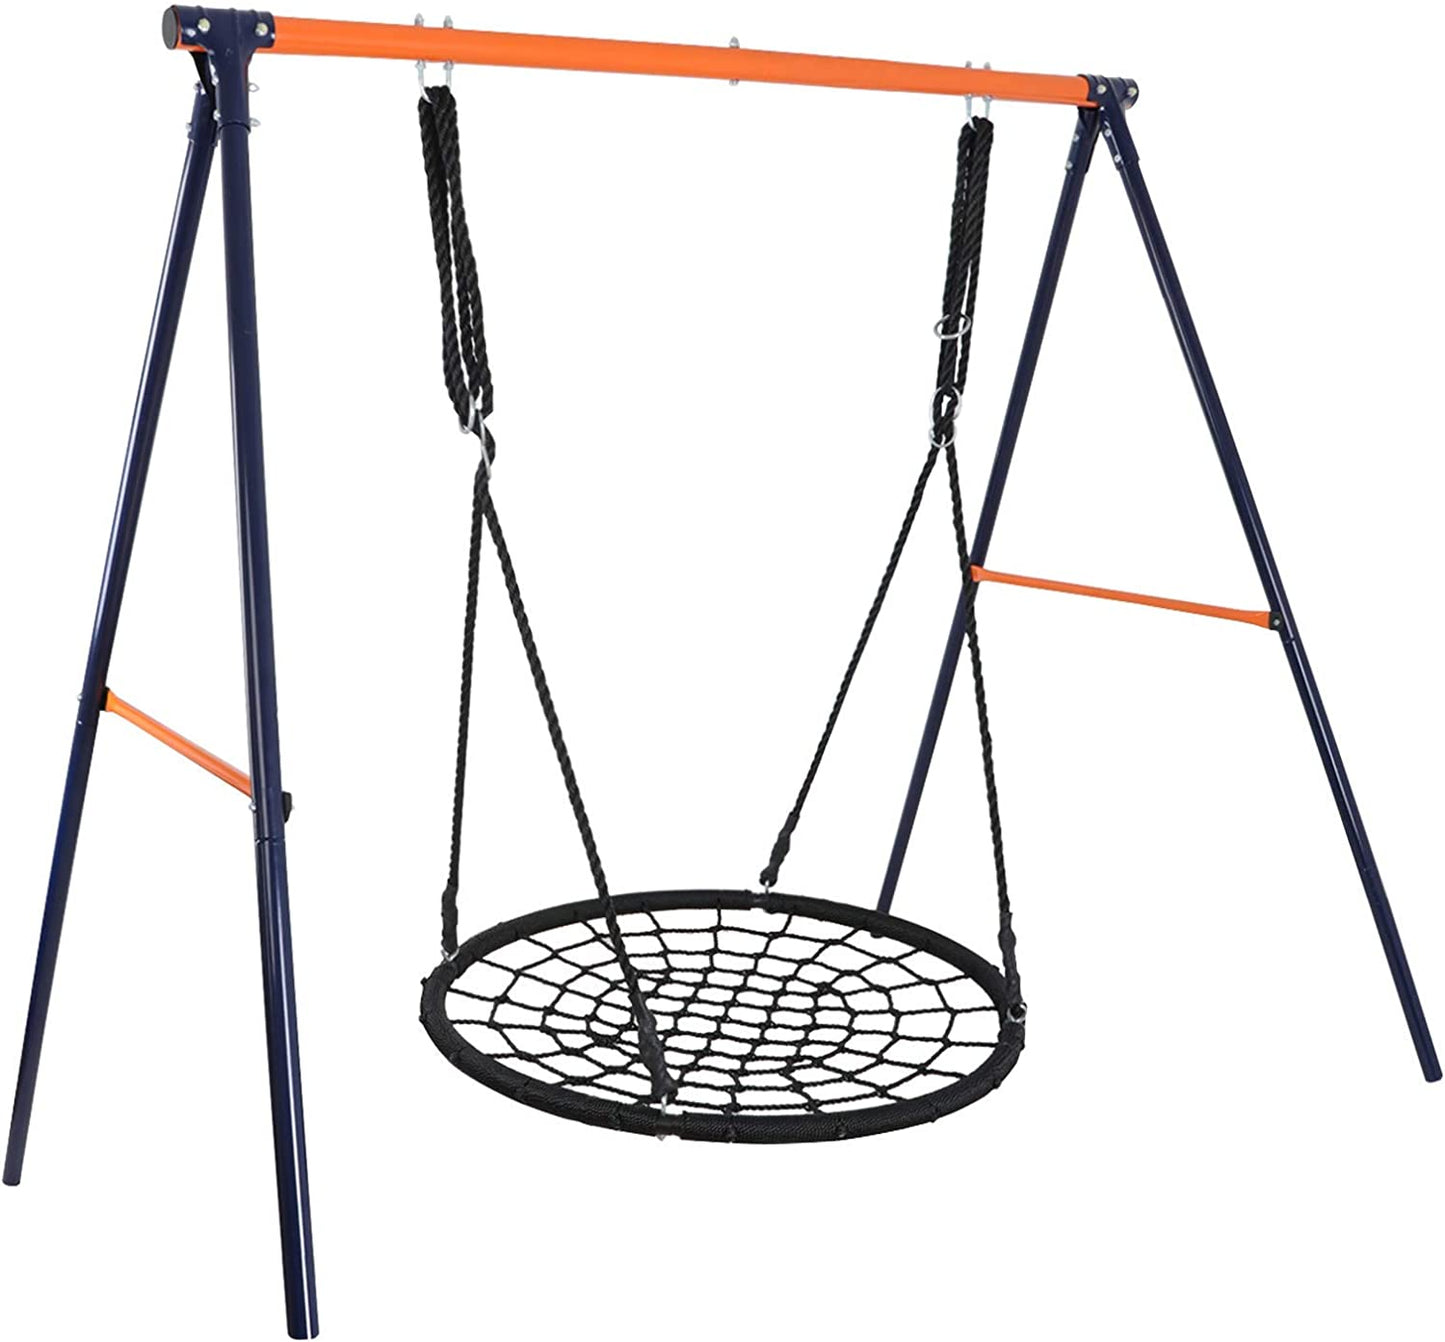 Kids Web Swing Set - 40’’ Spider Net Tree Swing and Metal Swing Frame Stand Swing Playset for Backyard Playground Kids Play Fun